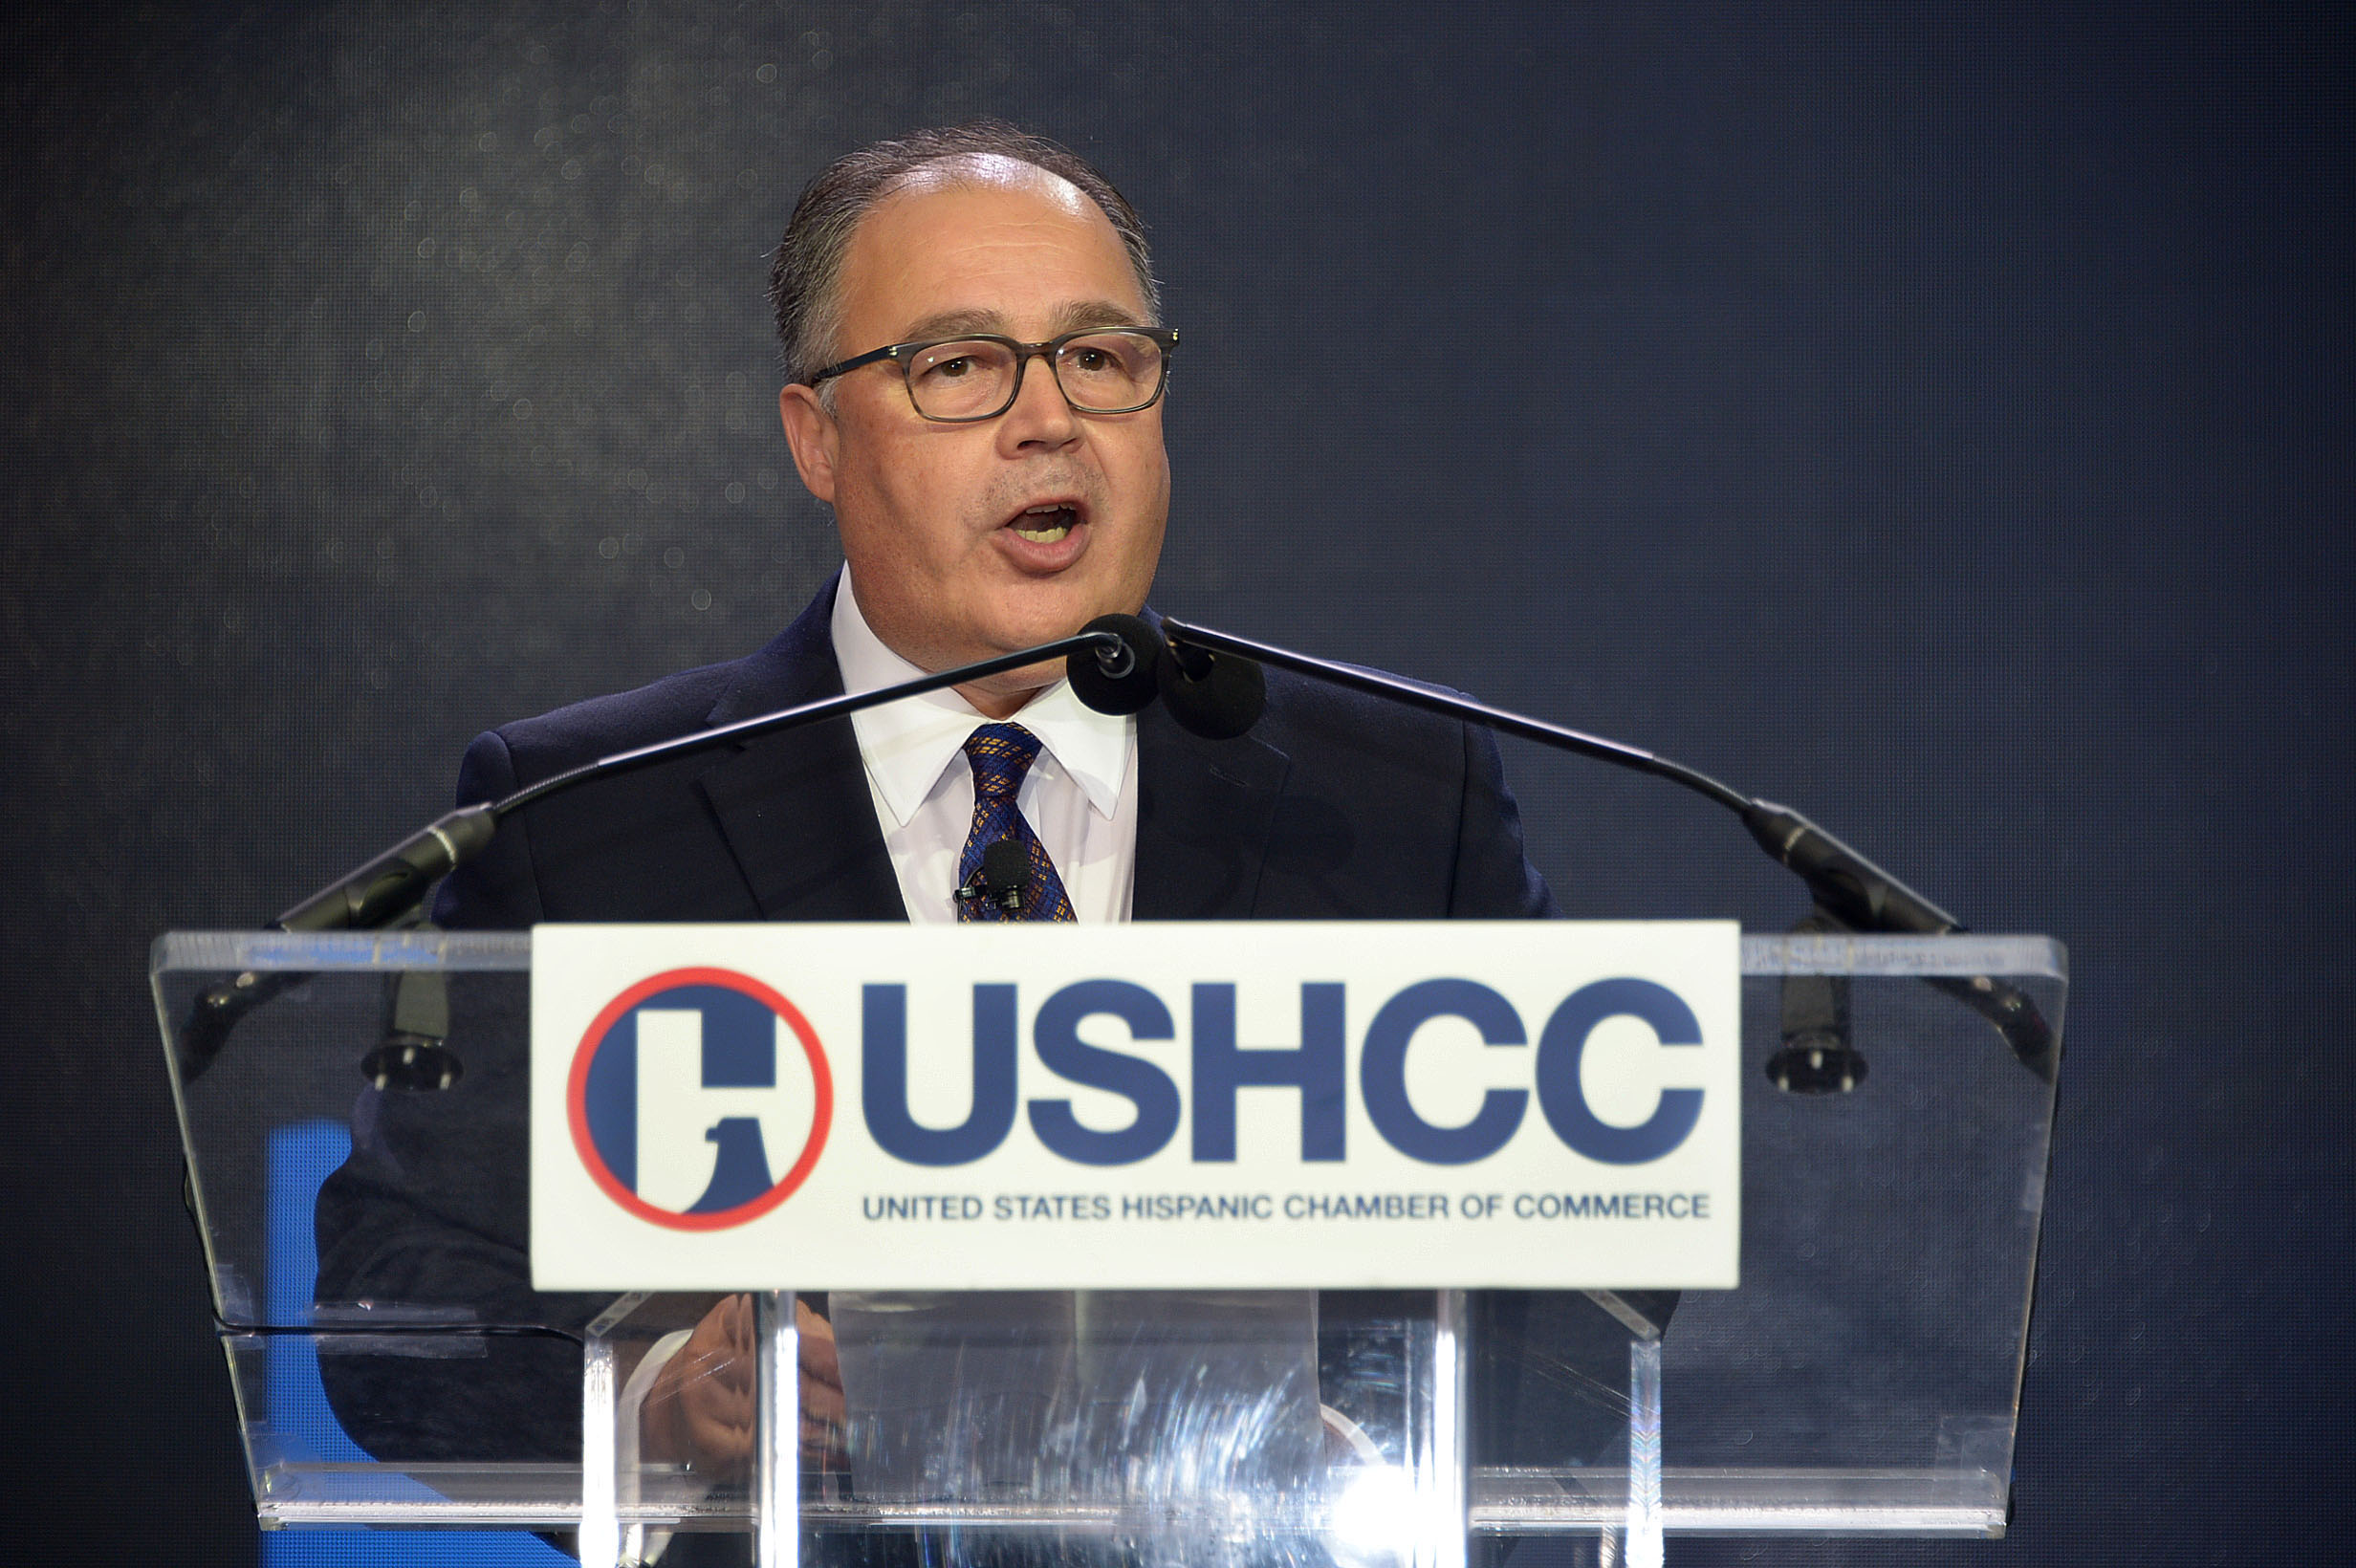 President & CEO of the U.S. Hispanic Chamber of Commerce Ramiro Cavazos. Photo: Peter Fitzpatrick/AL DÍA News.